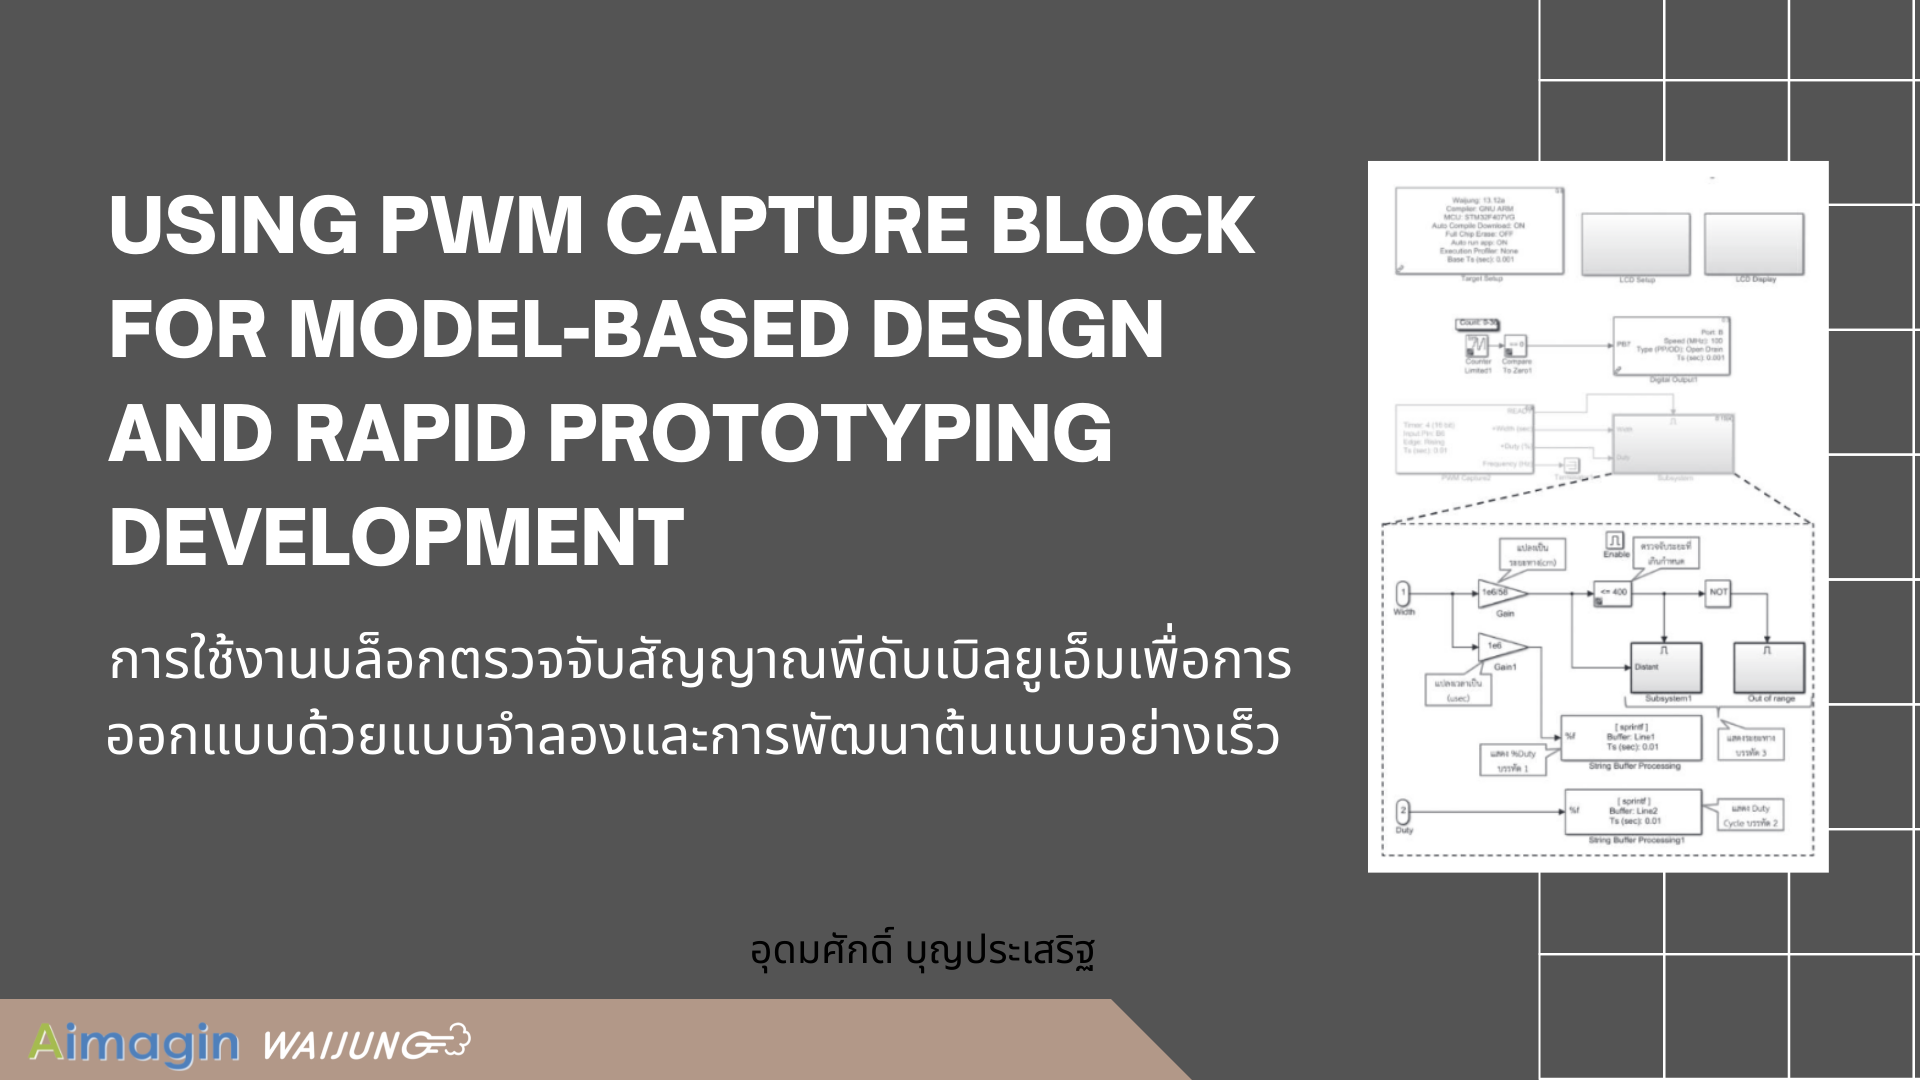 Using PWM Capture Block for Model-Based Design and Rapid Prototyping Development การใช้งานบล็อกตรวจจับสัญญาณพีดับเบิลยูเอ็มเพื่อการออกแบบด้วยแบบจำลองและการพัฒนาต้นแบบอย่างเร็ว